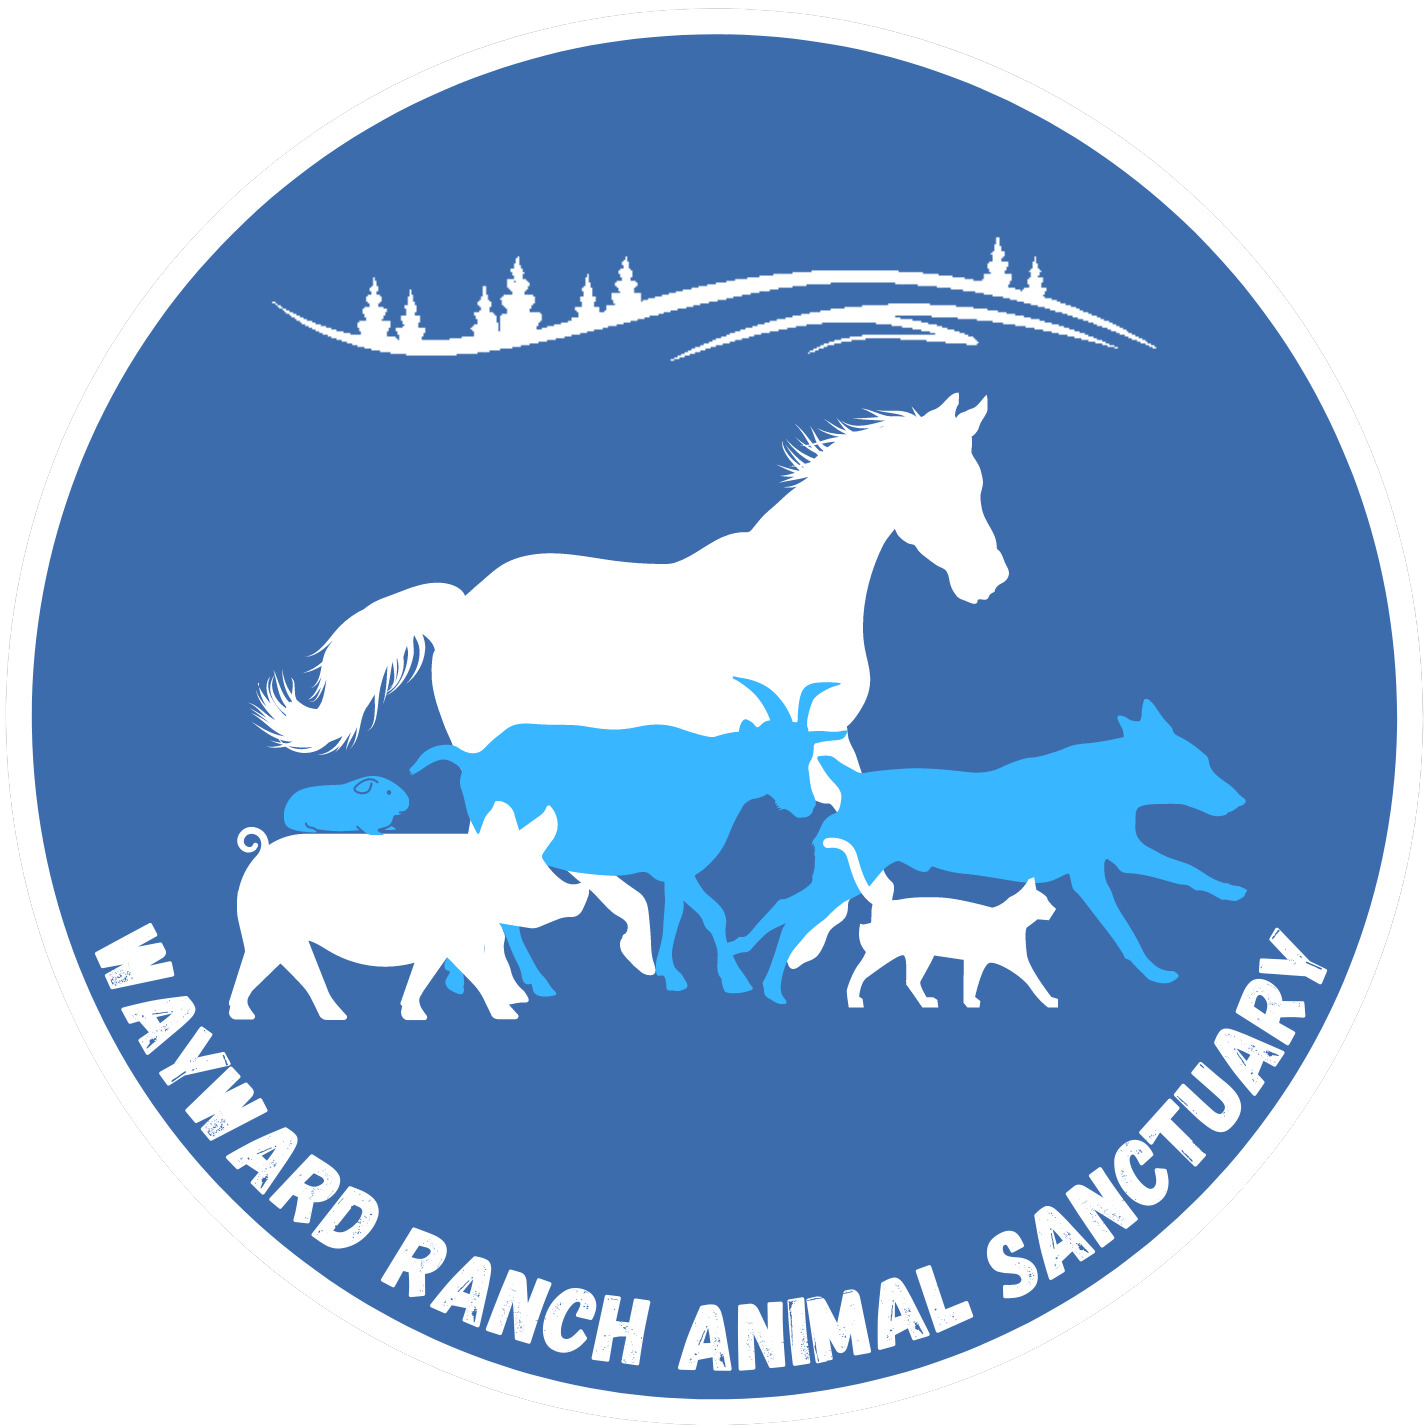 Wayward Ranch Animal Sanctuary